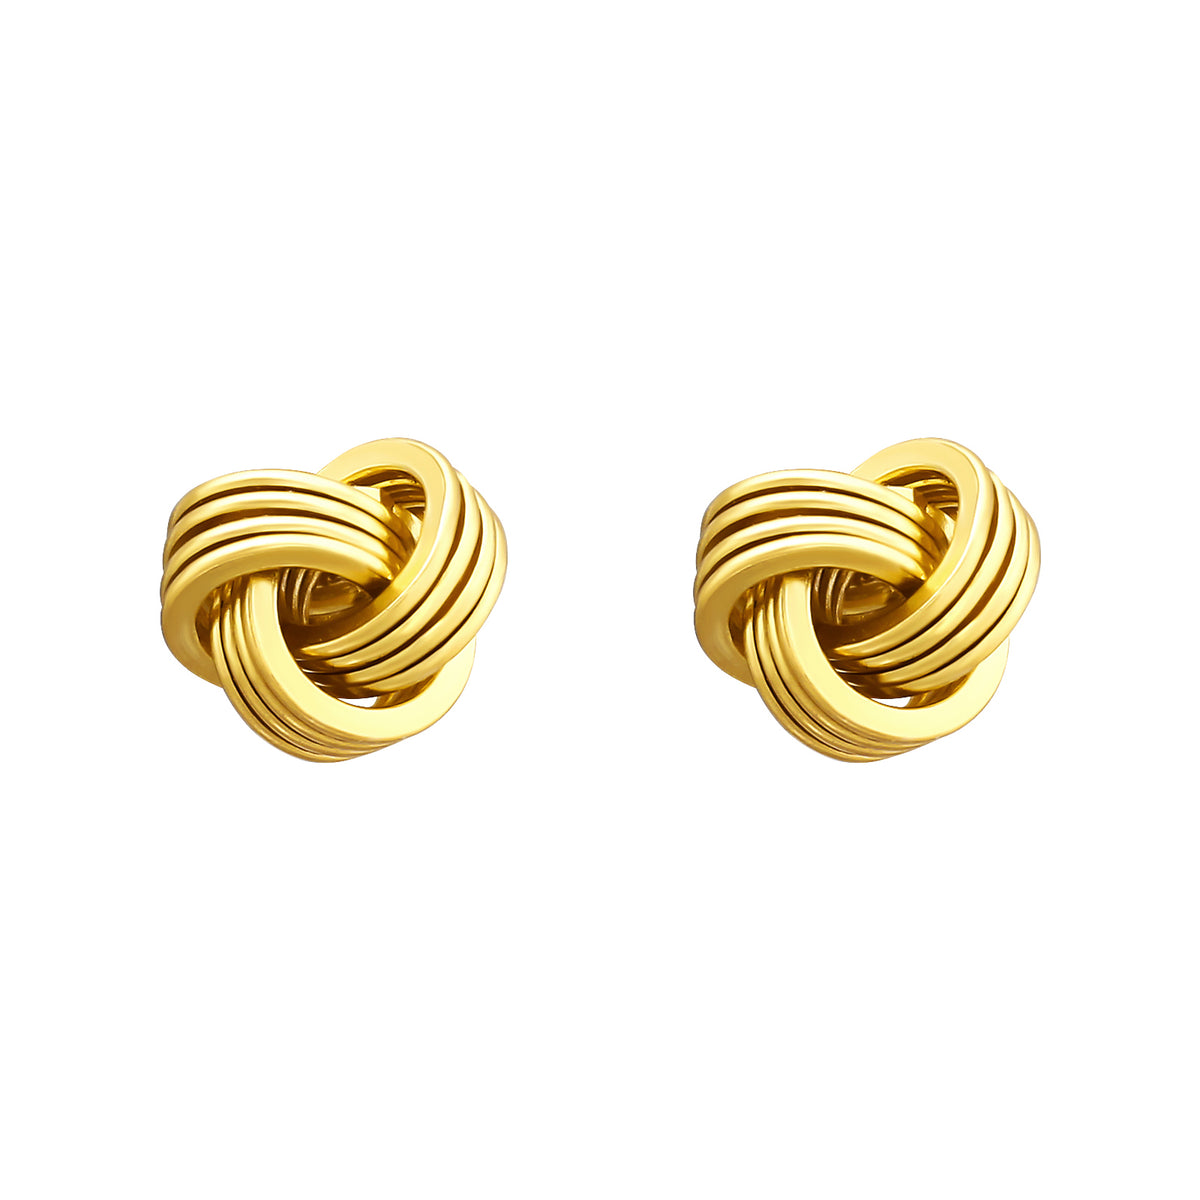 Eternity silver earrings, gold-plated